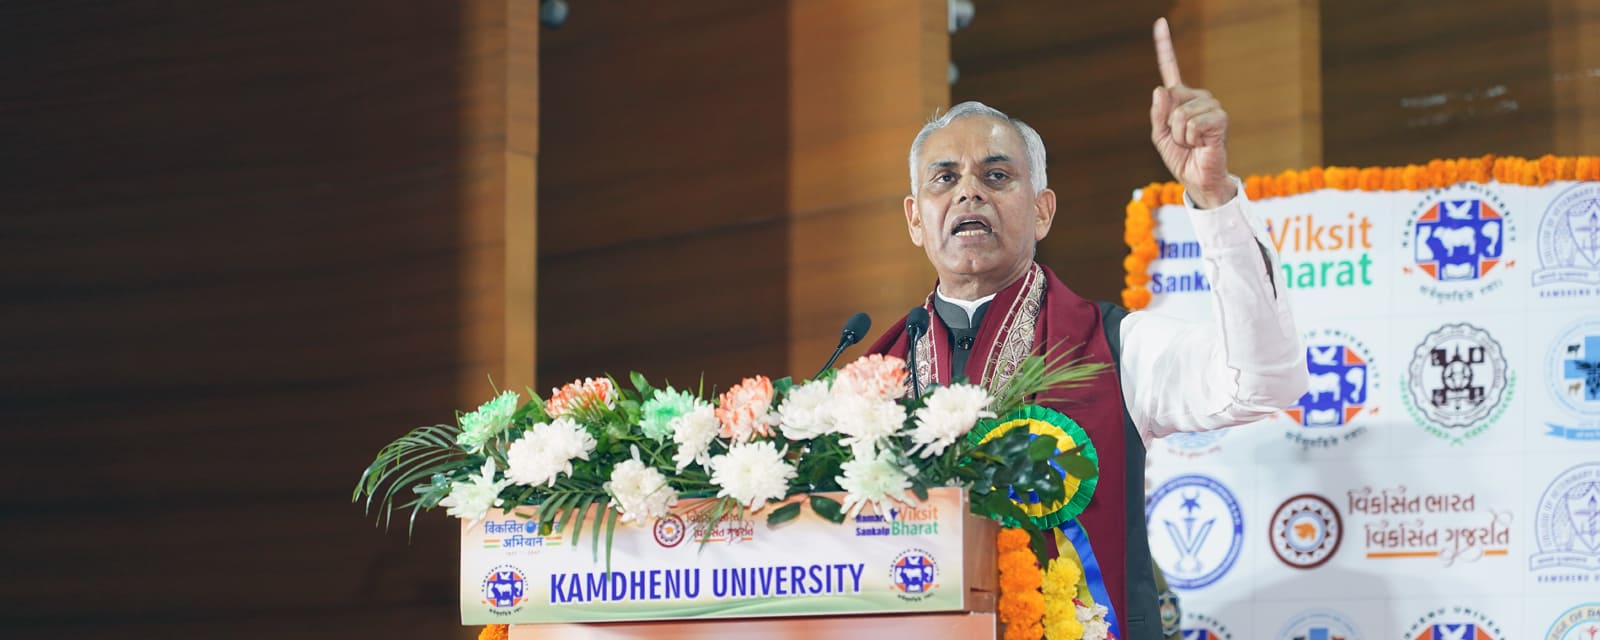 10th Annual Convocation of Kamdhenu University